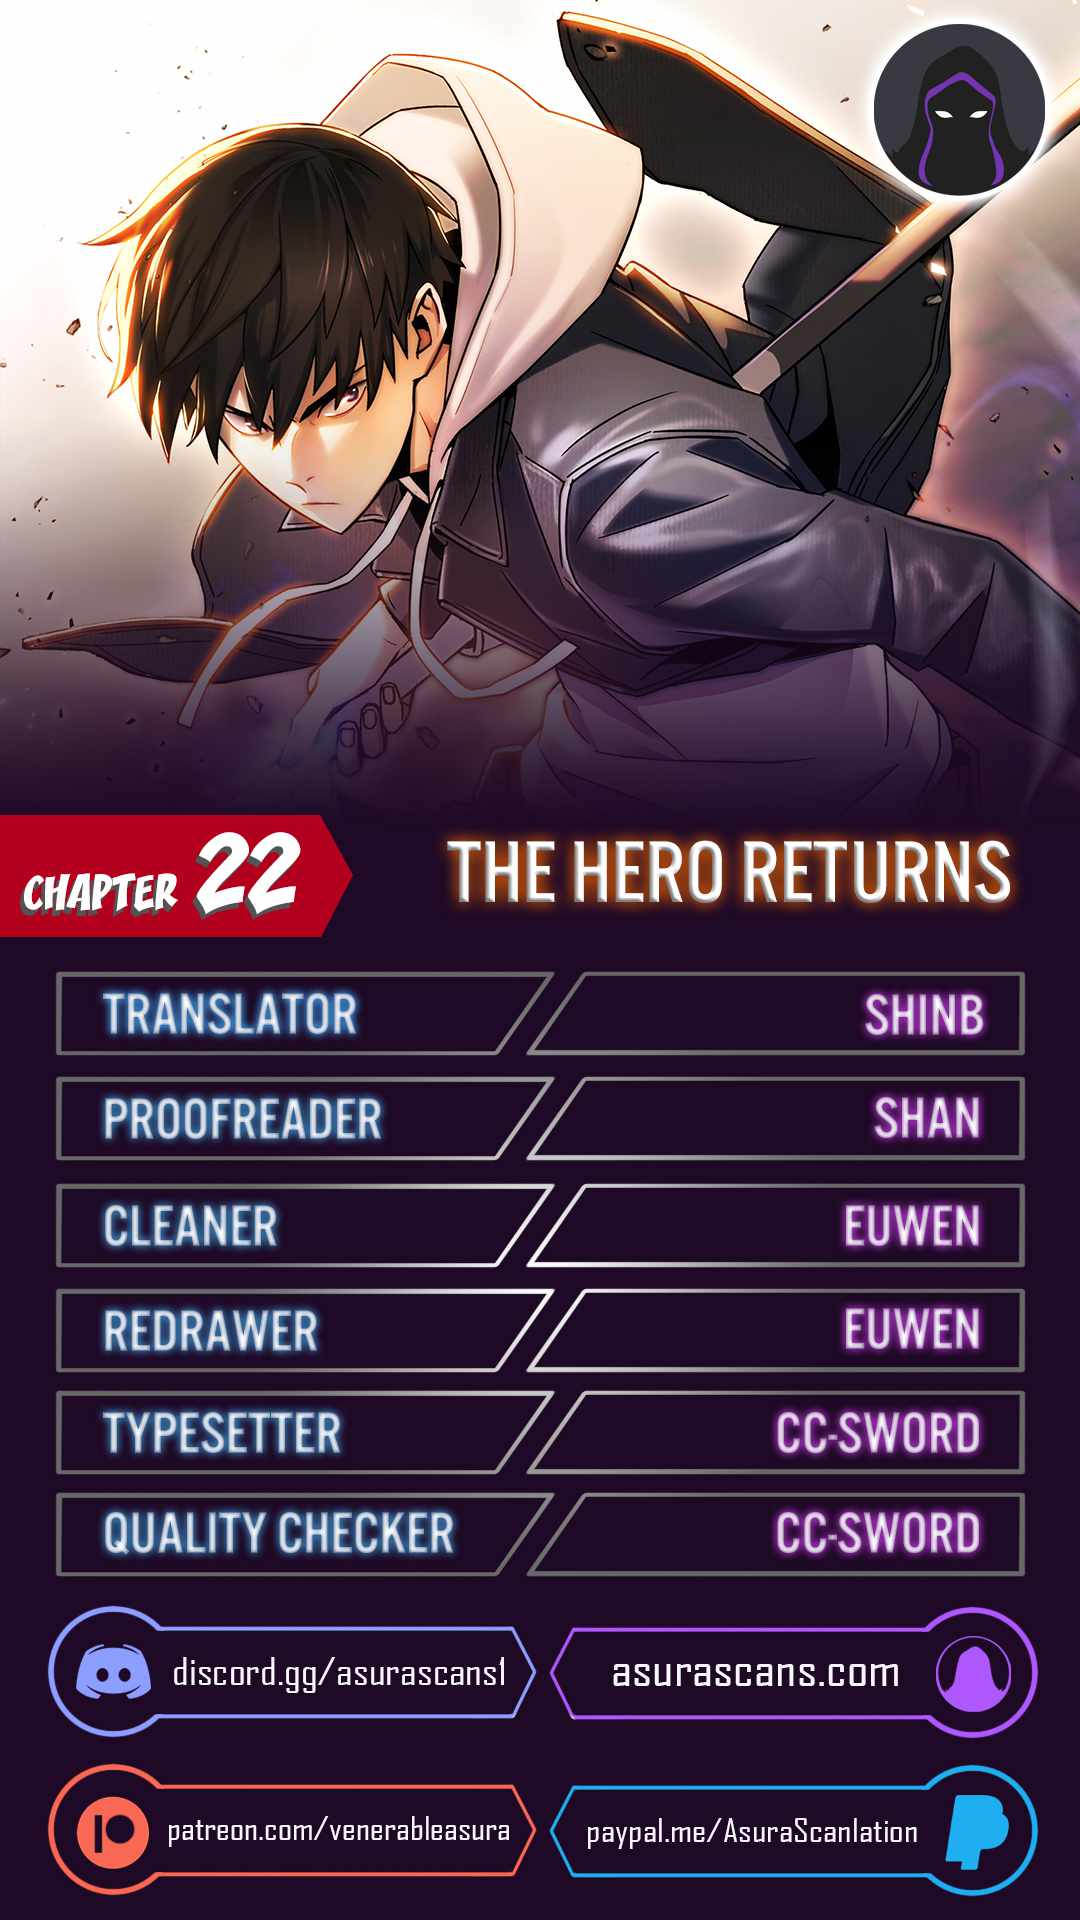 The Hero Returns chapter 22